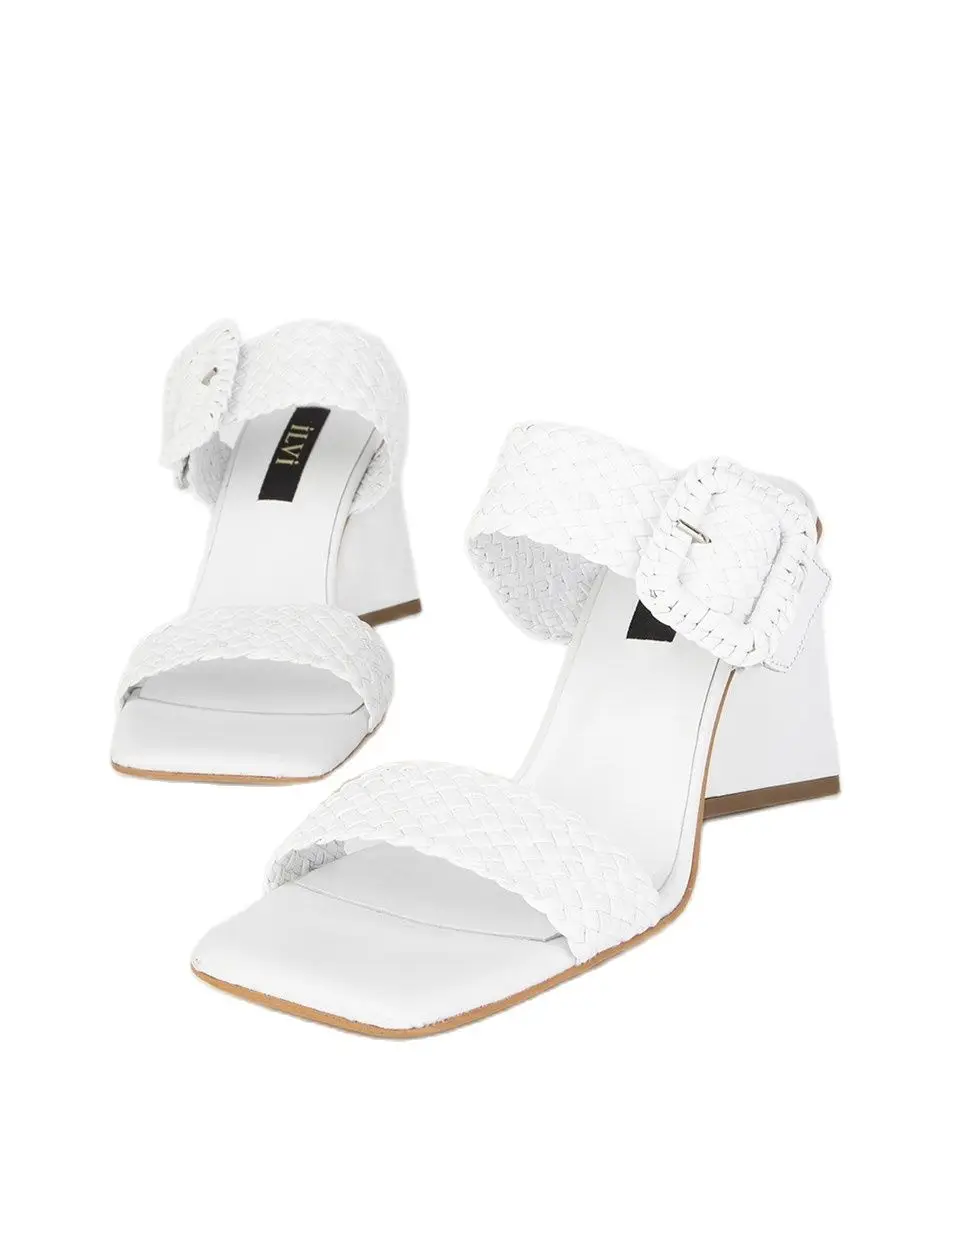 

ILVi-Genuine Leather Handmade Miny White Woven Leather Women's Heeled Slide Women Shoes 2022 Spring/Summer